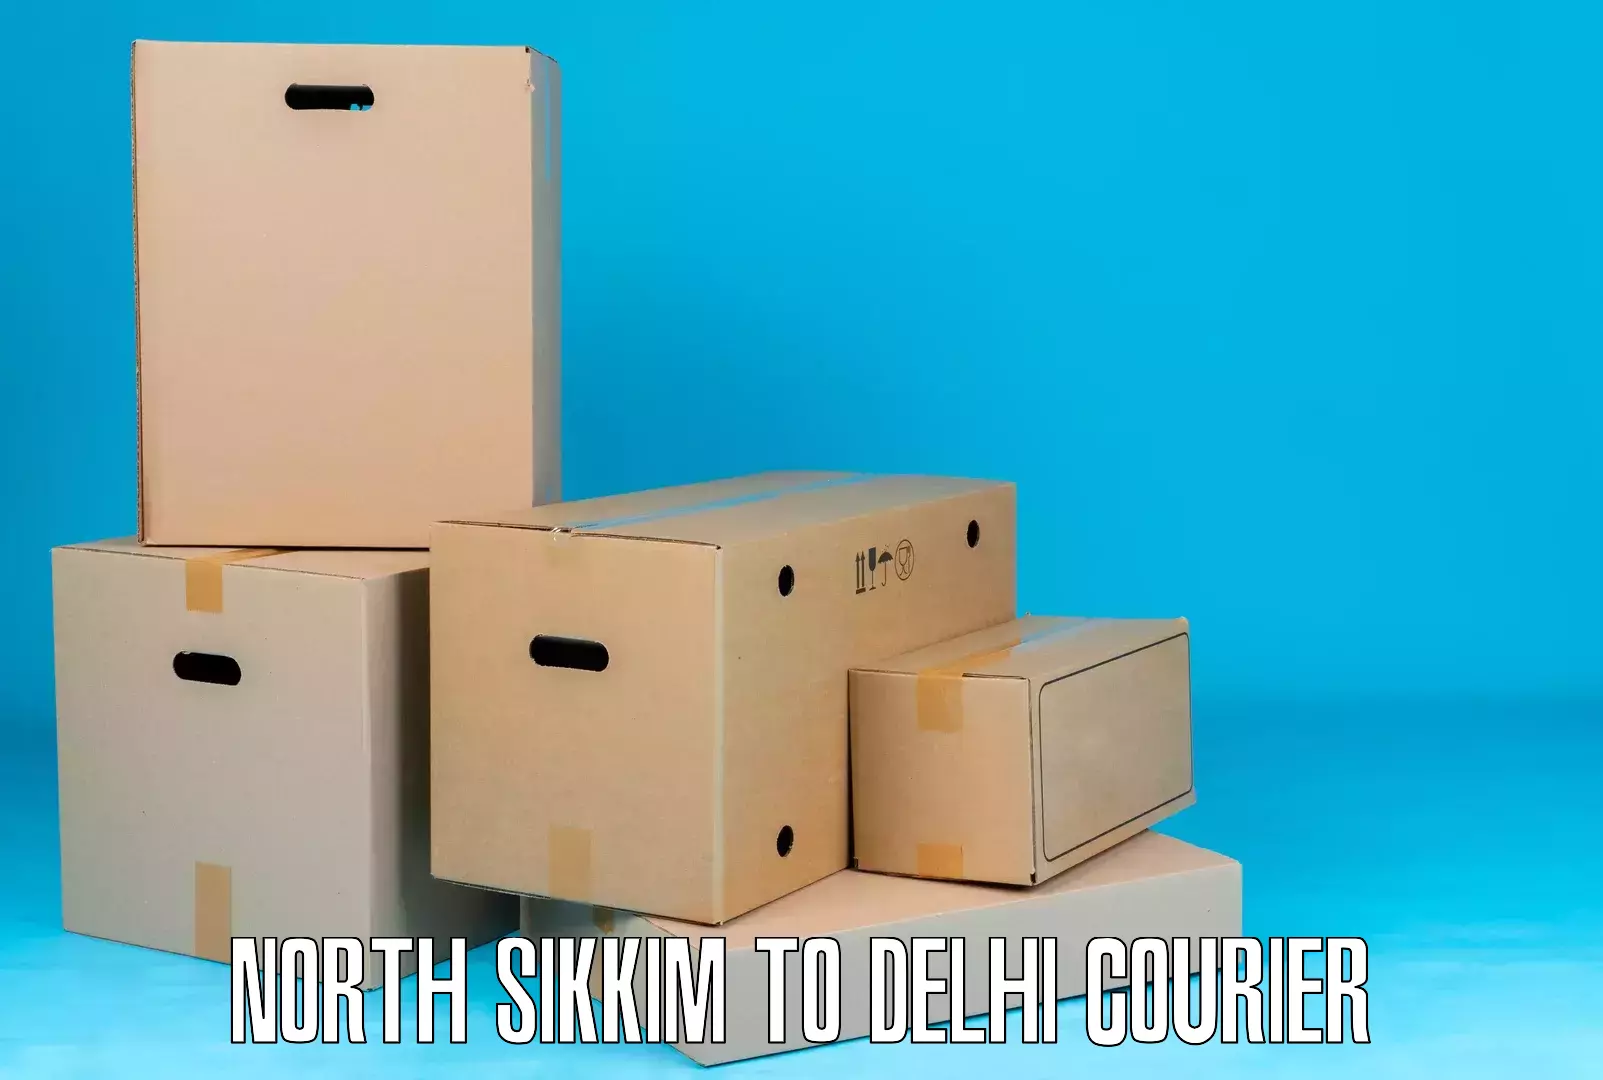 Courier service booking North Sikkim to Delhi